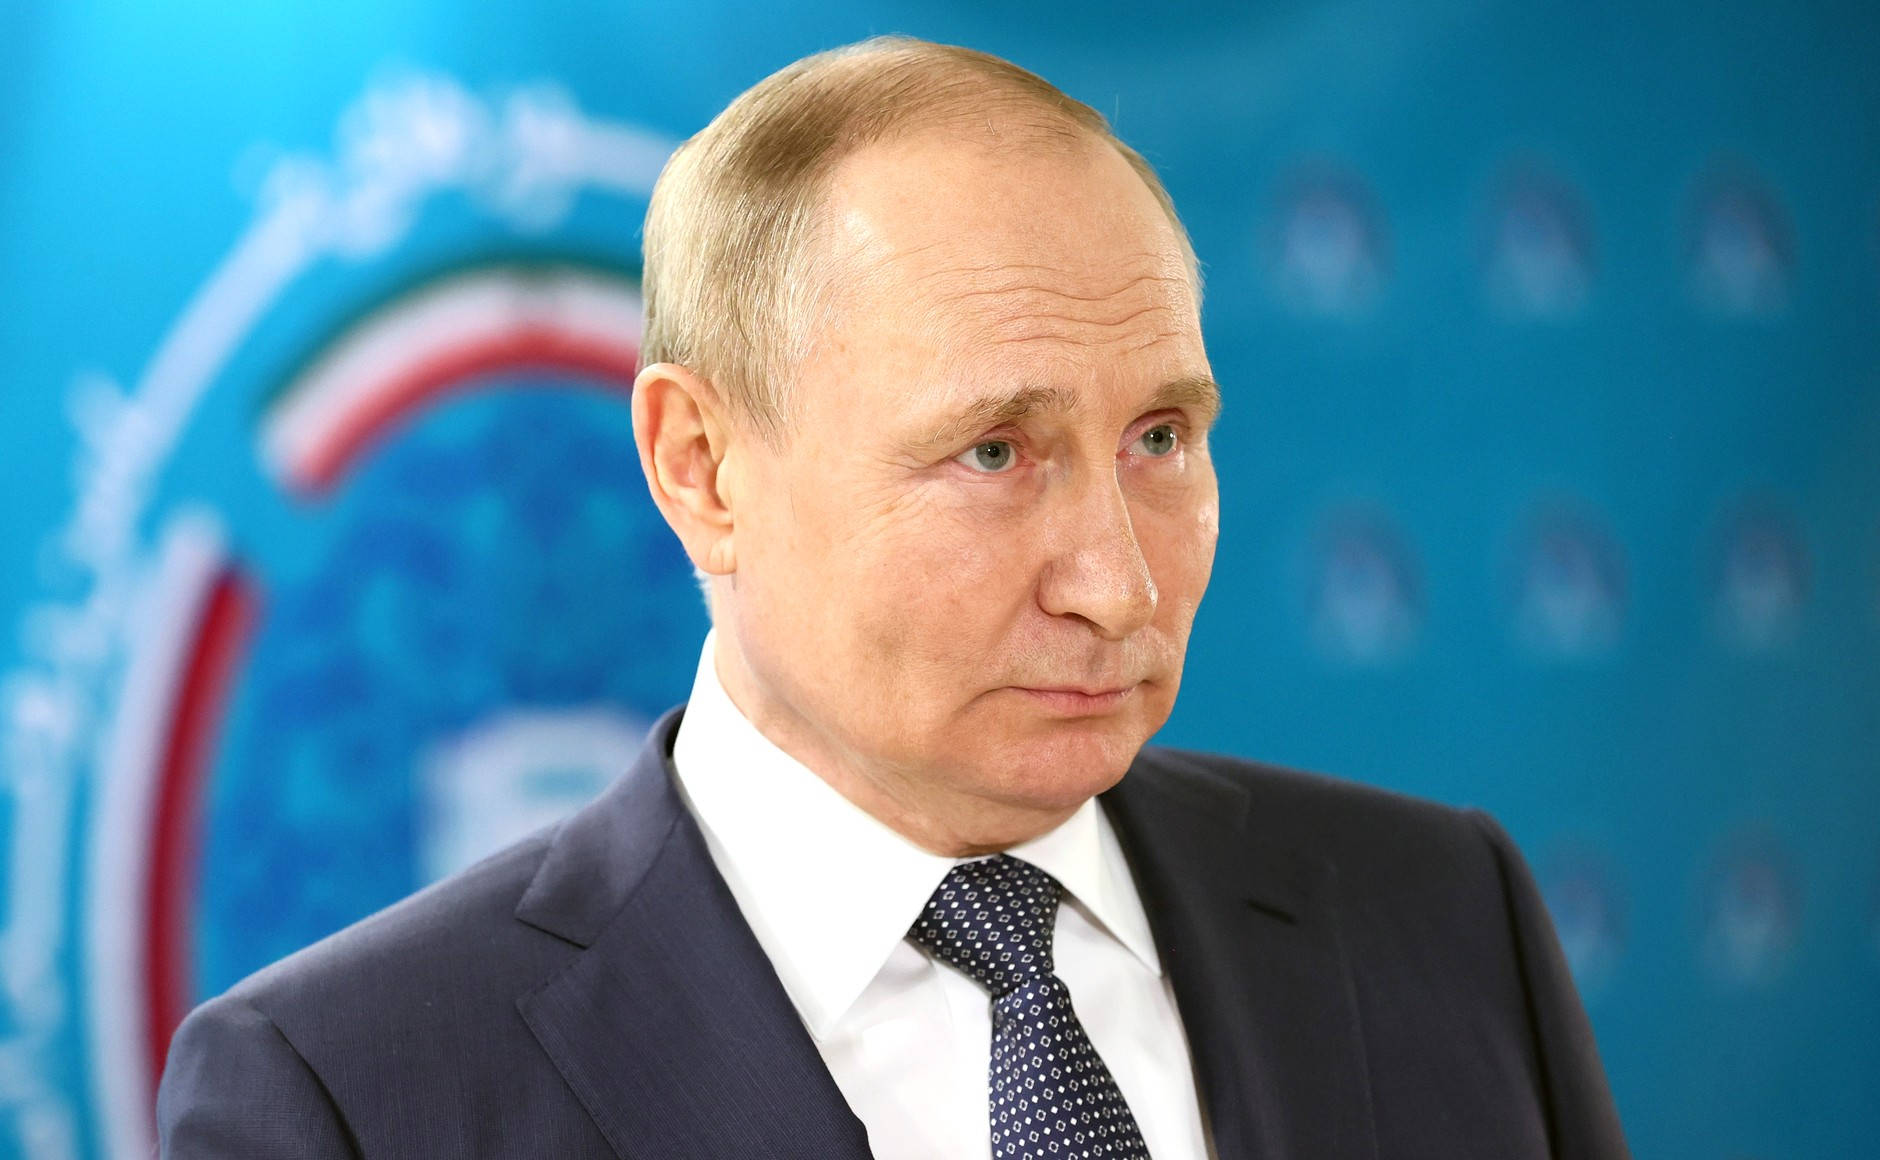 Russian President Vladimir Putin Posing Against A Blurry Blue Backdrop Wallpaper